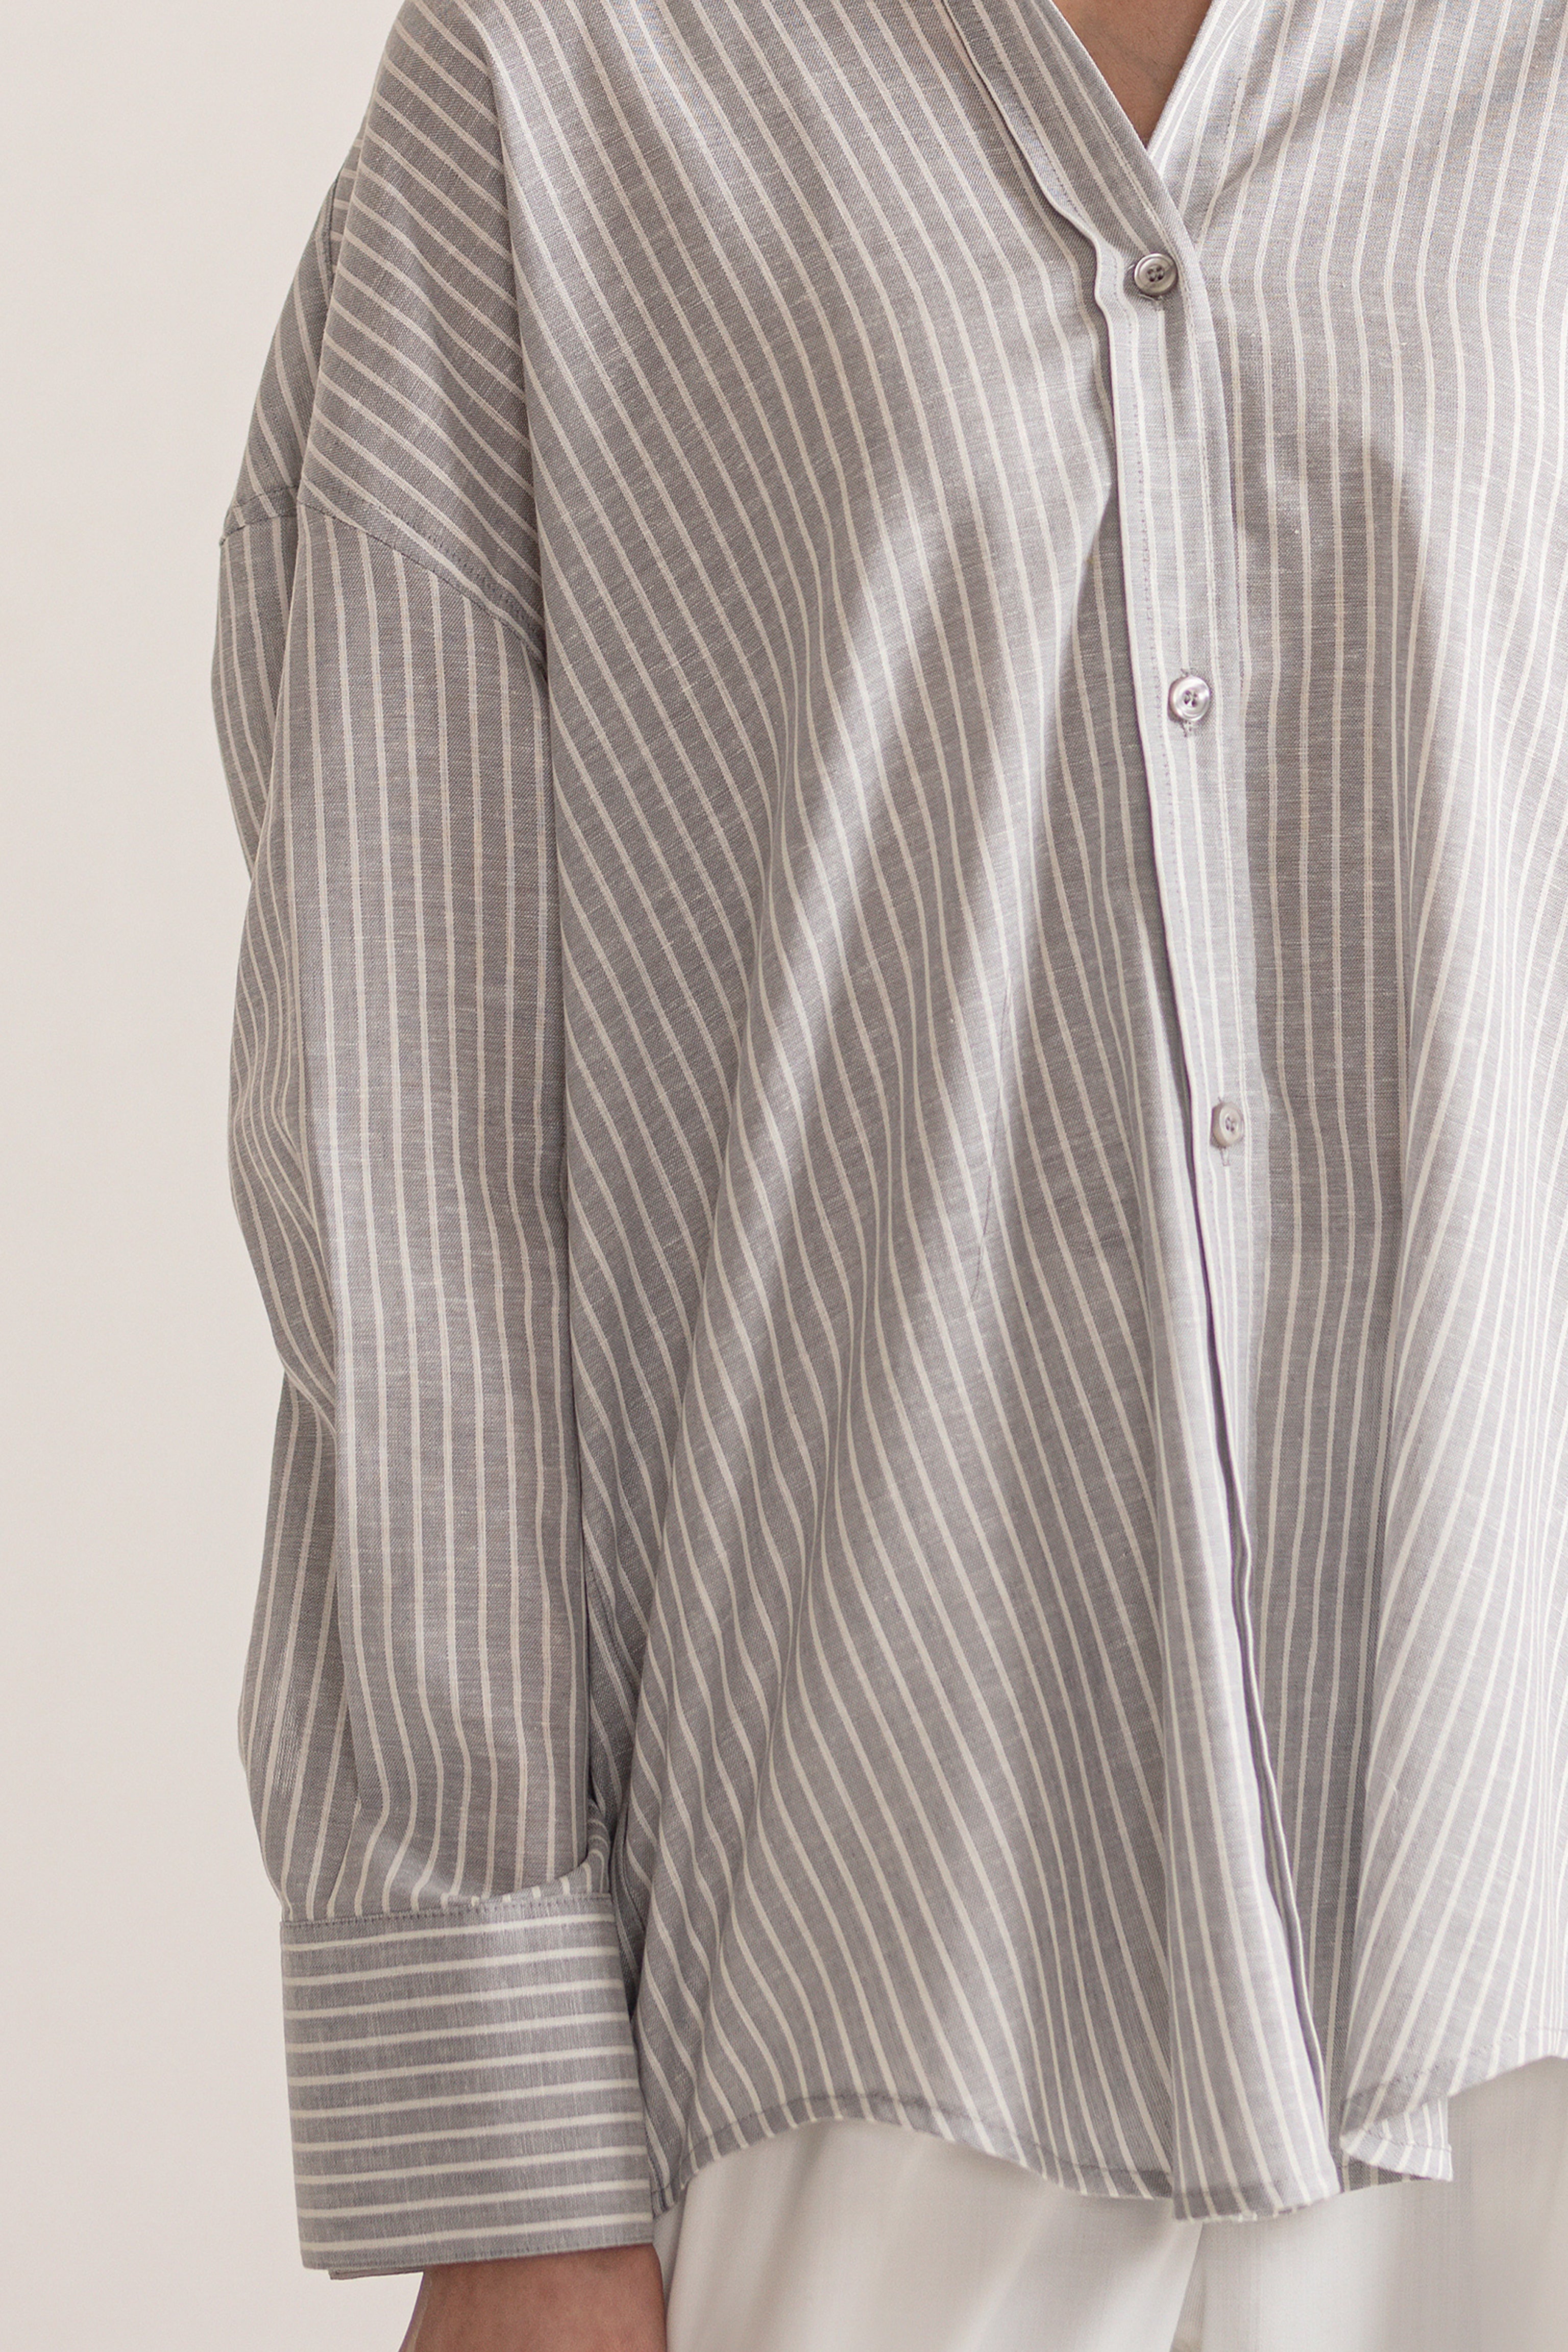 White & Grey Striped Linen Shirt Price